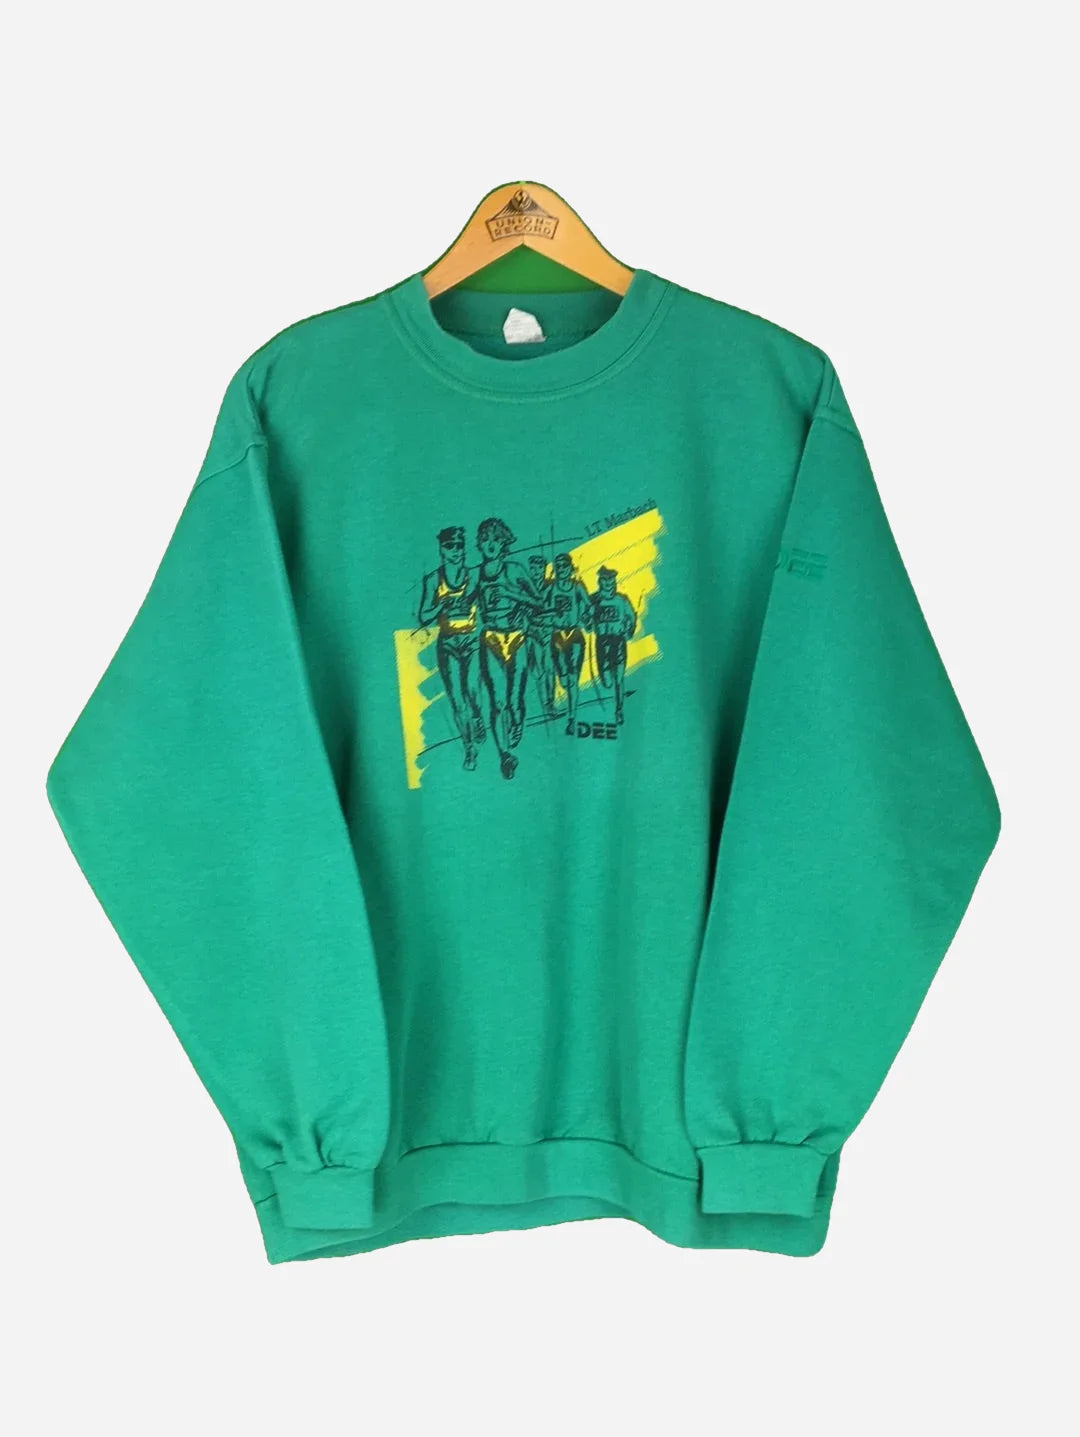 "Lauftreff Marbach" Sweater (M)